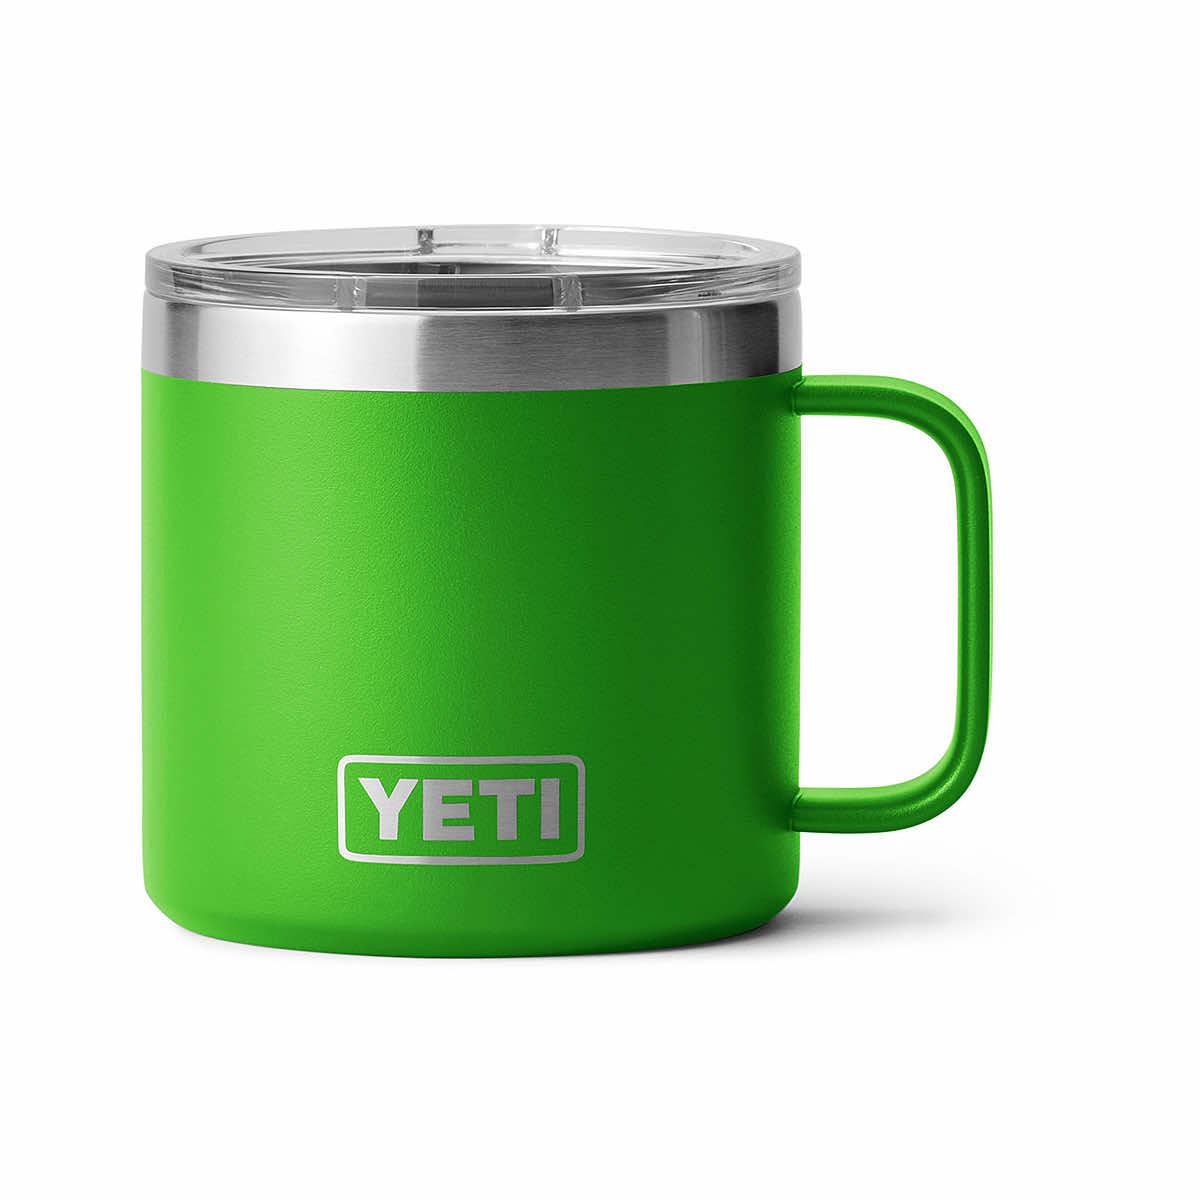 YETI 35 oz Rambler Travel Mug with Straw Lid CHARTREUSE Limited